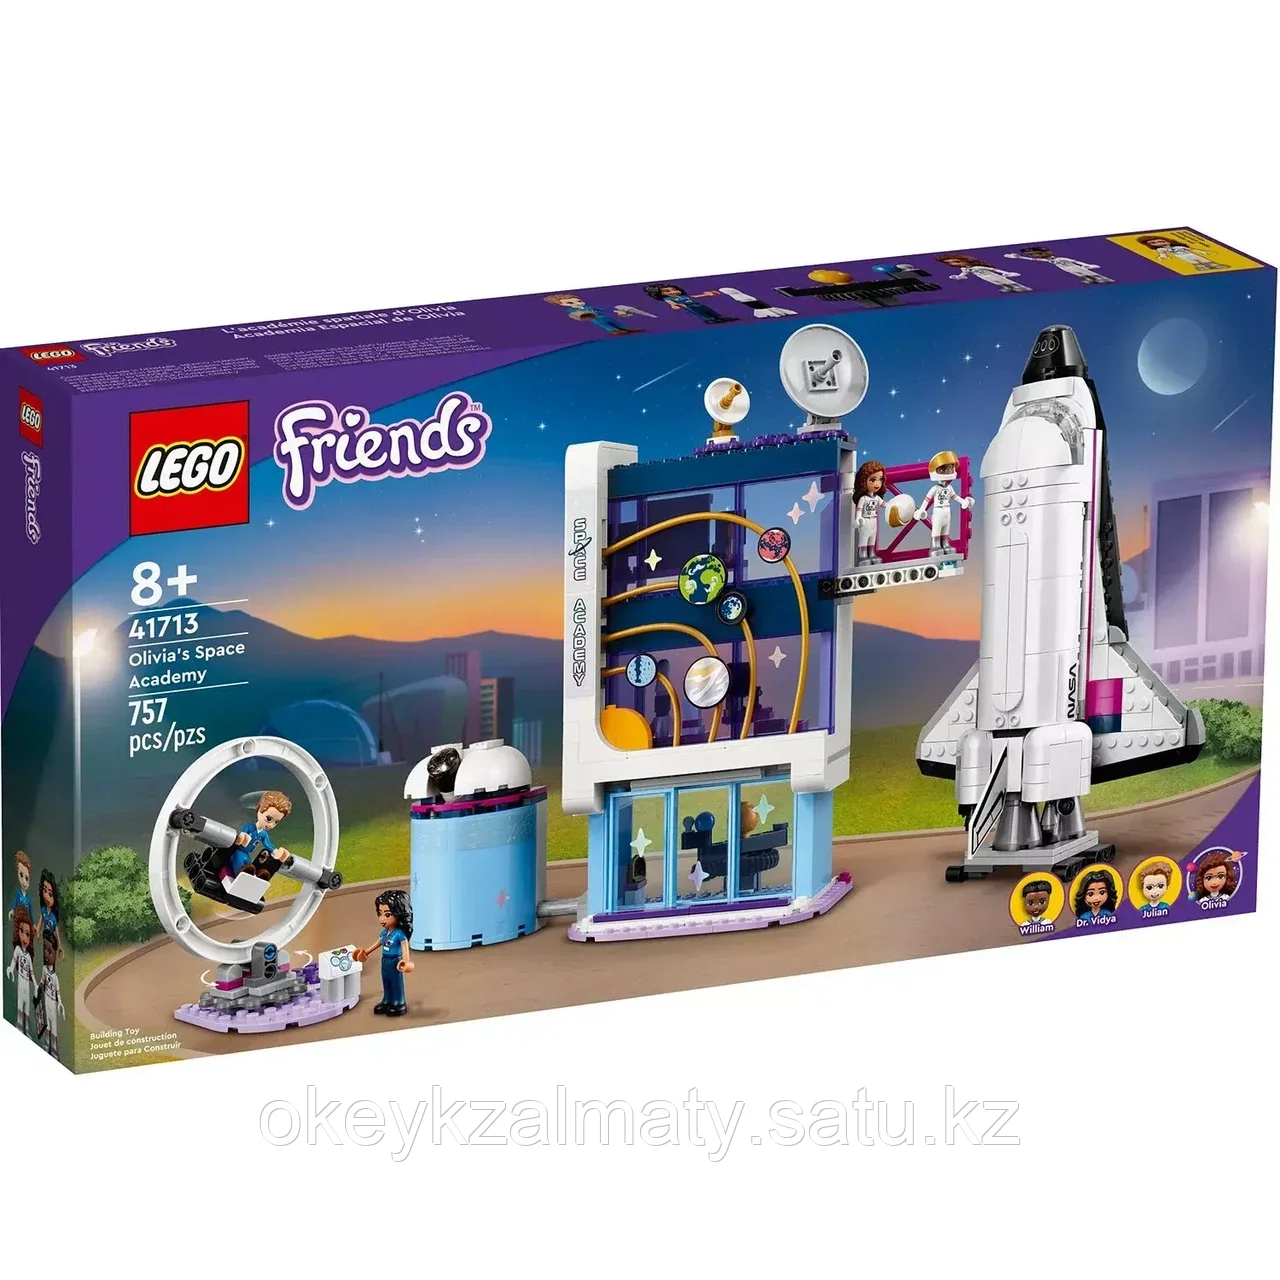 LEGO Friends: Космическая академия Оливии 41713